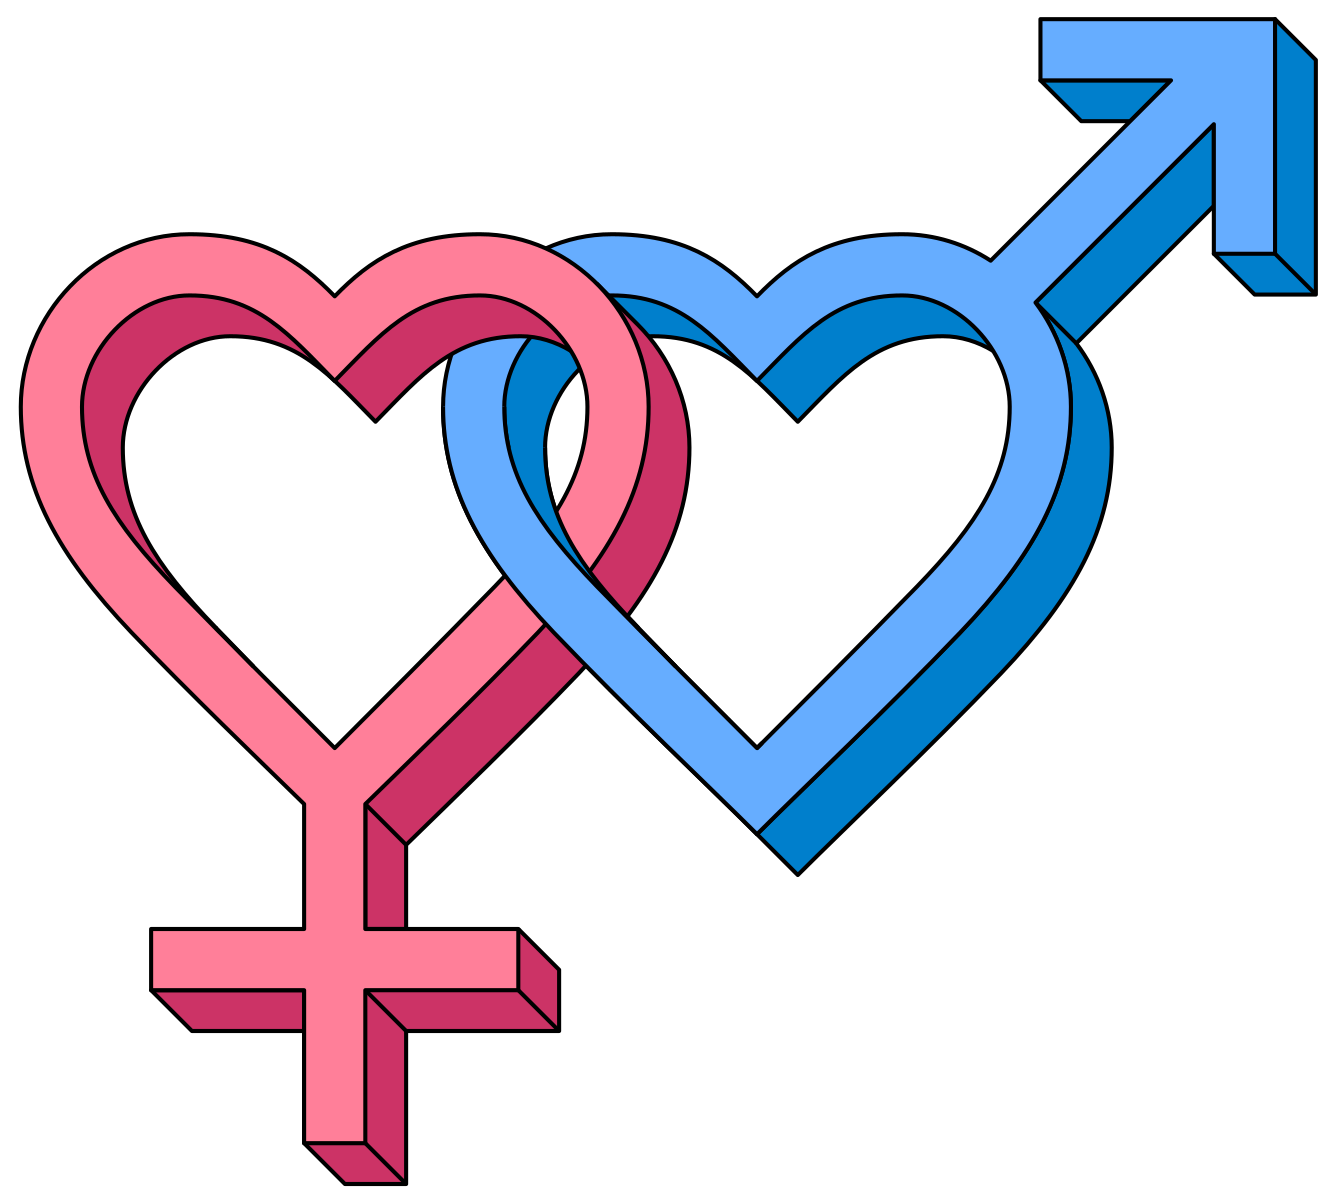 File:Heterosexual-hearts-symbol-3D.svg.